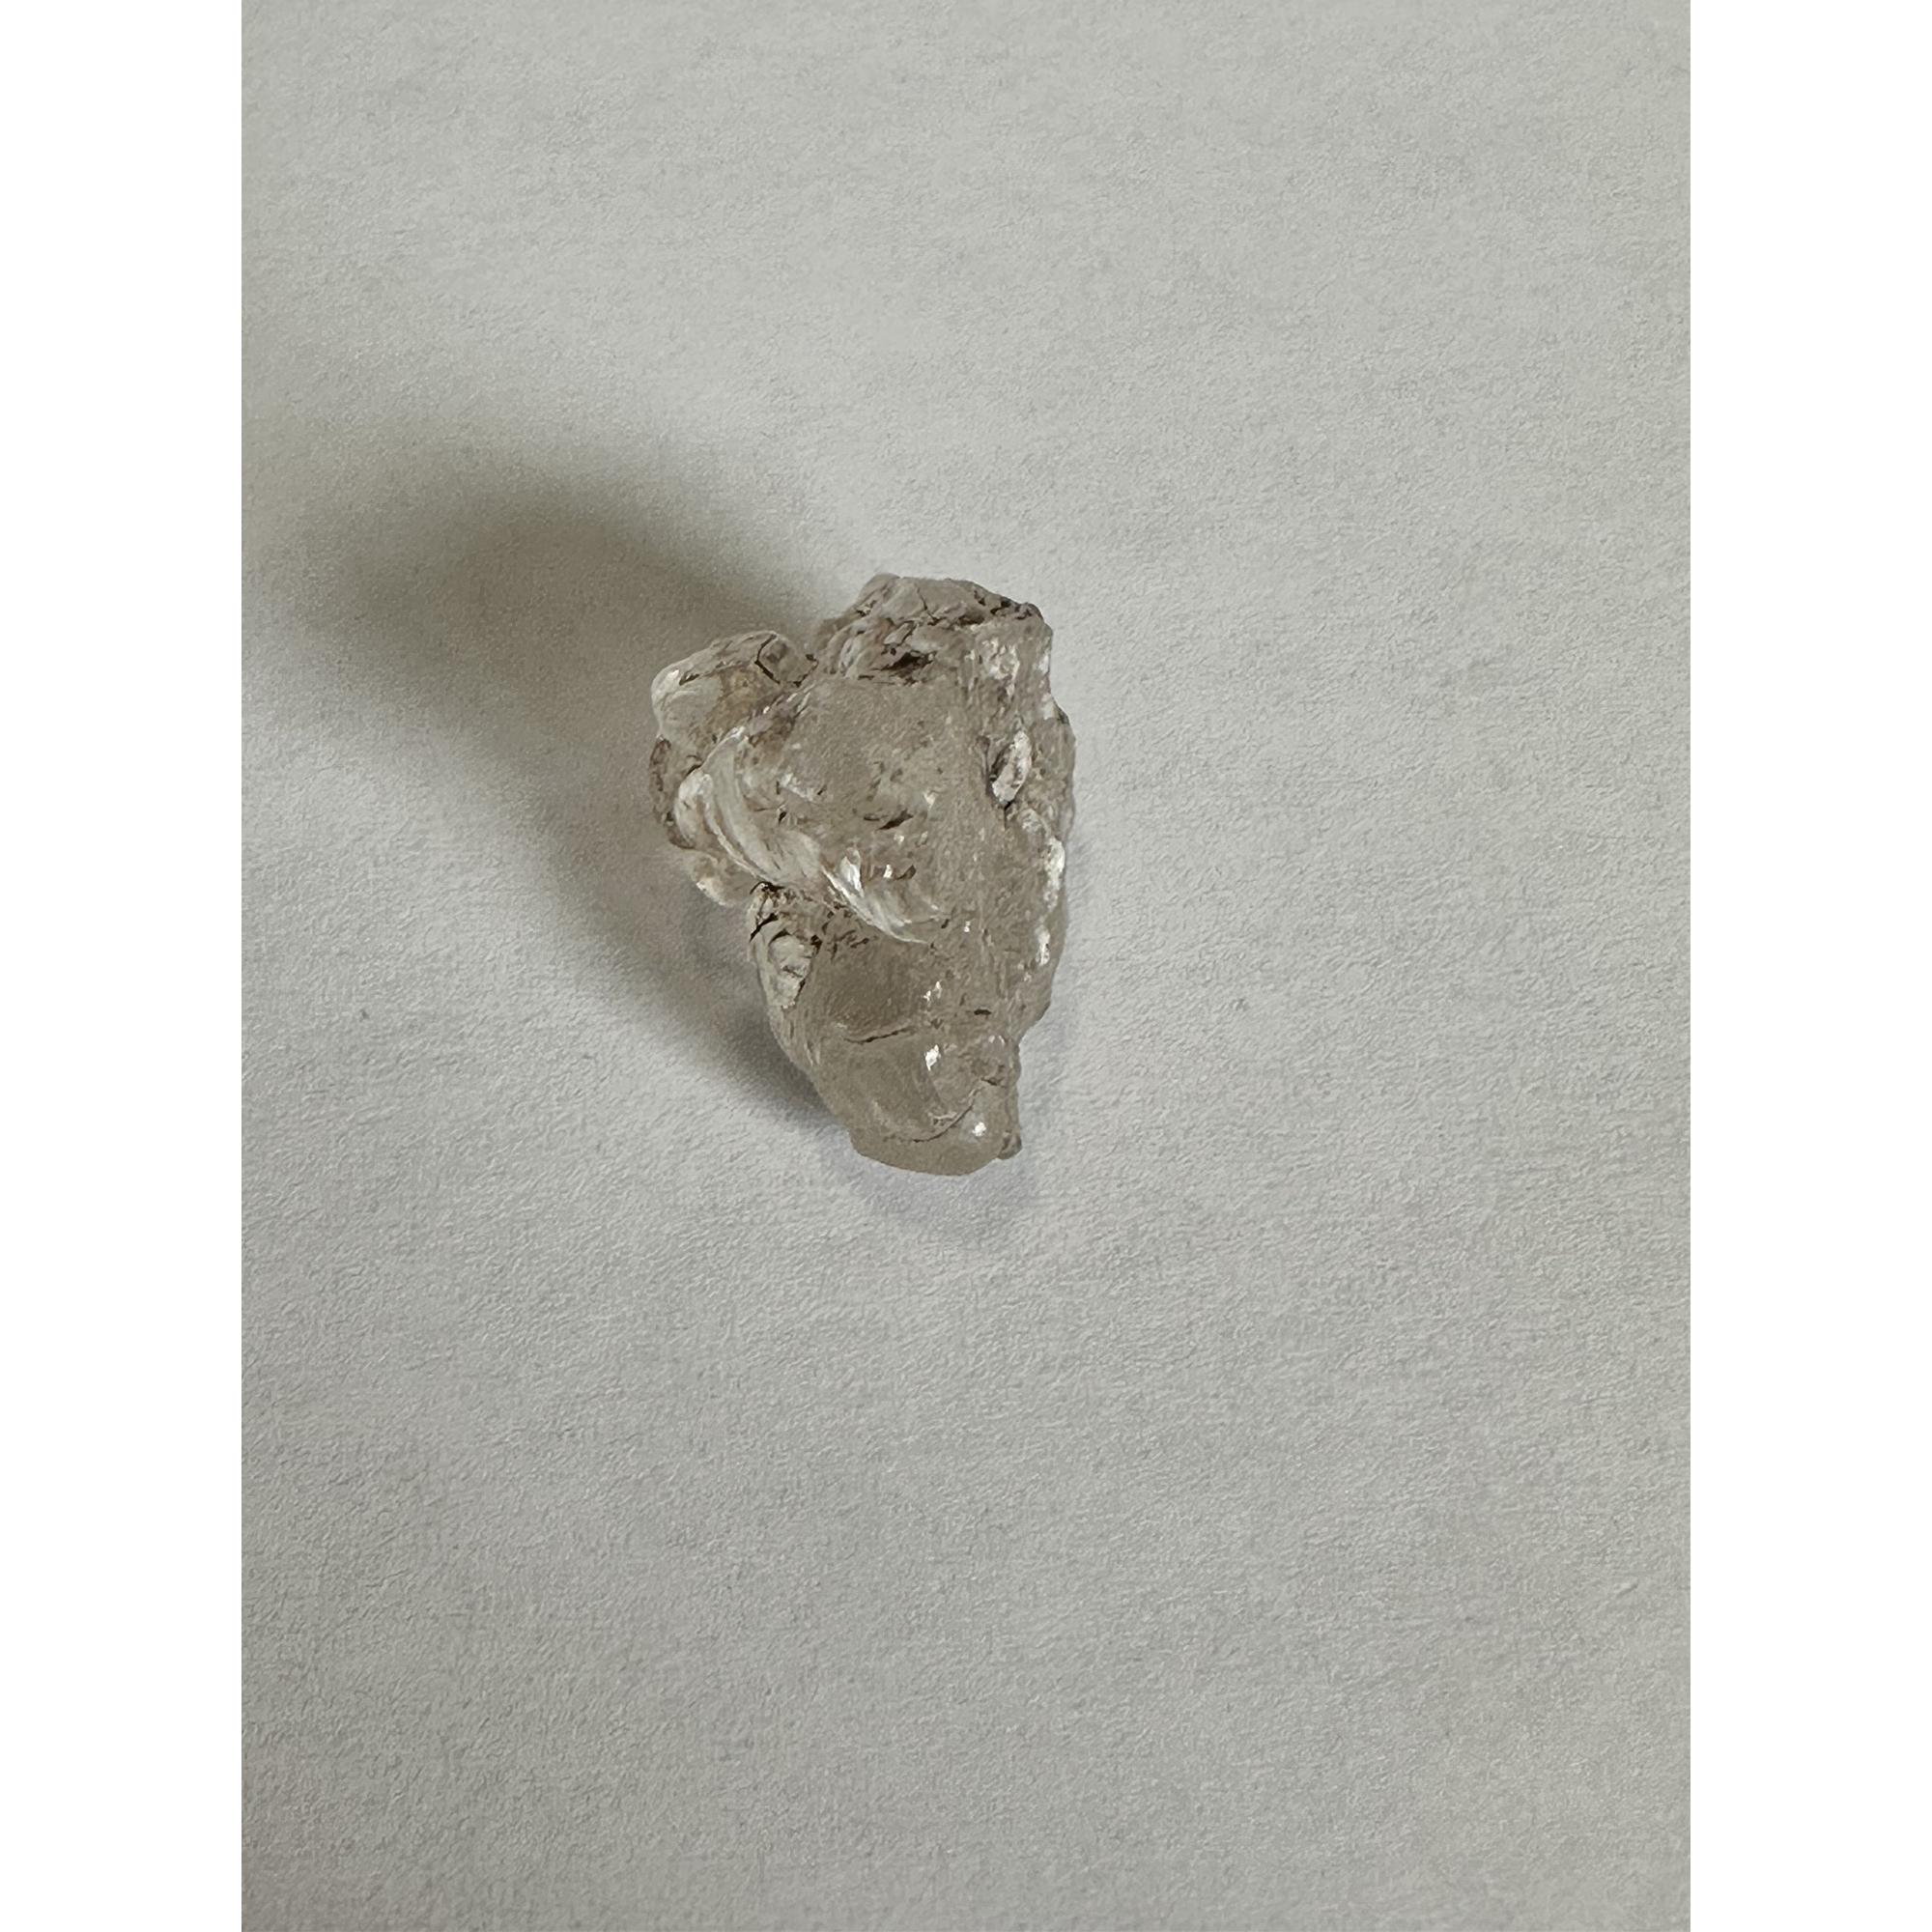 Hyalite Opal, 2.36 grams, Mexico, great Uv glow Prehistoric Online